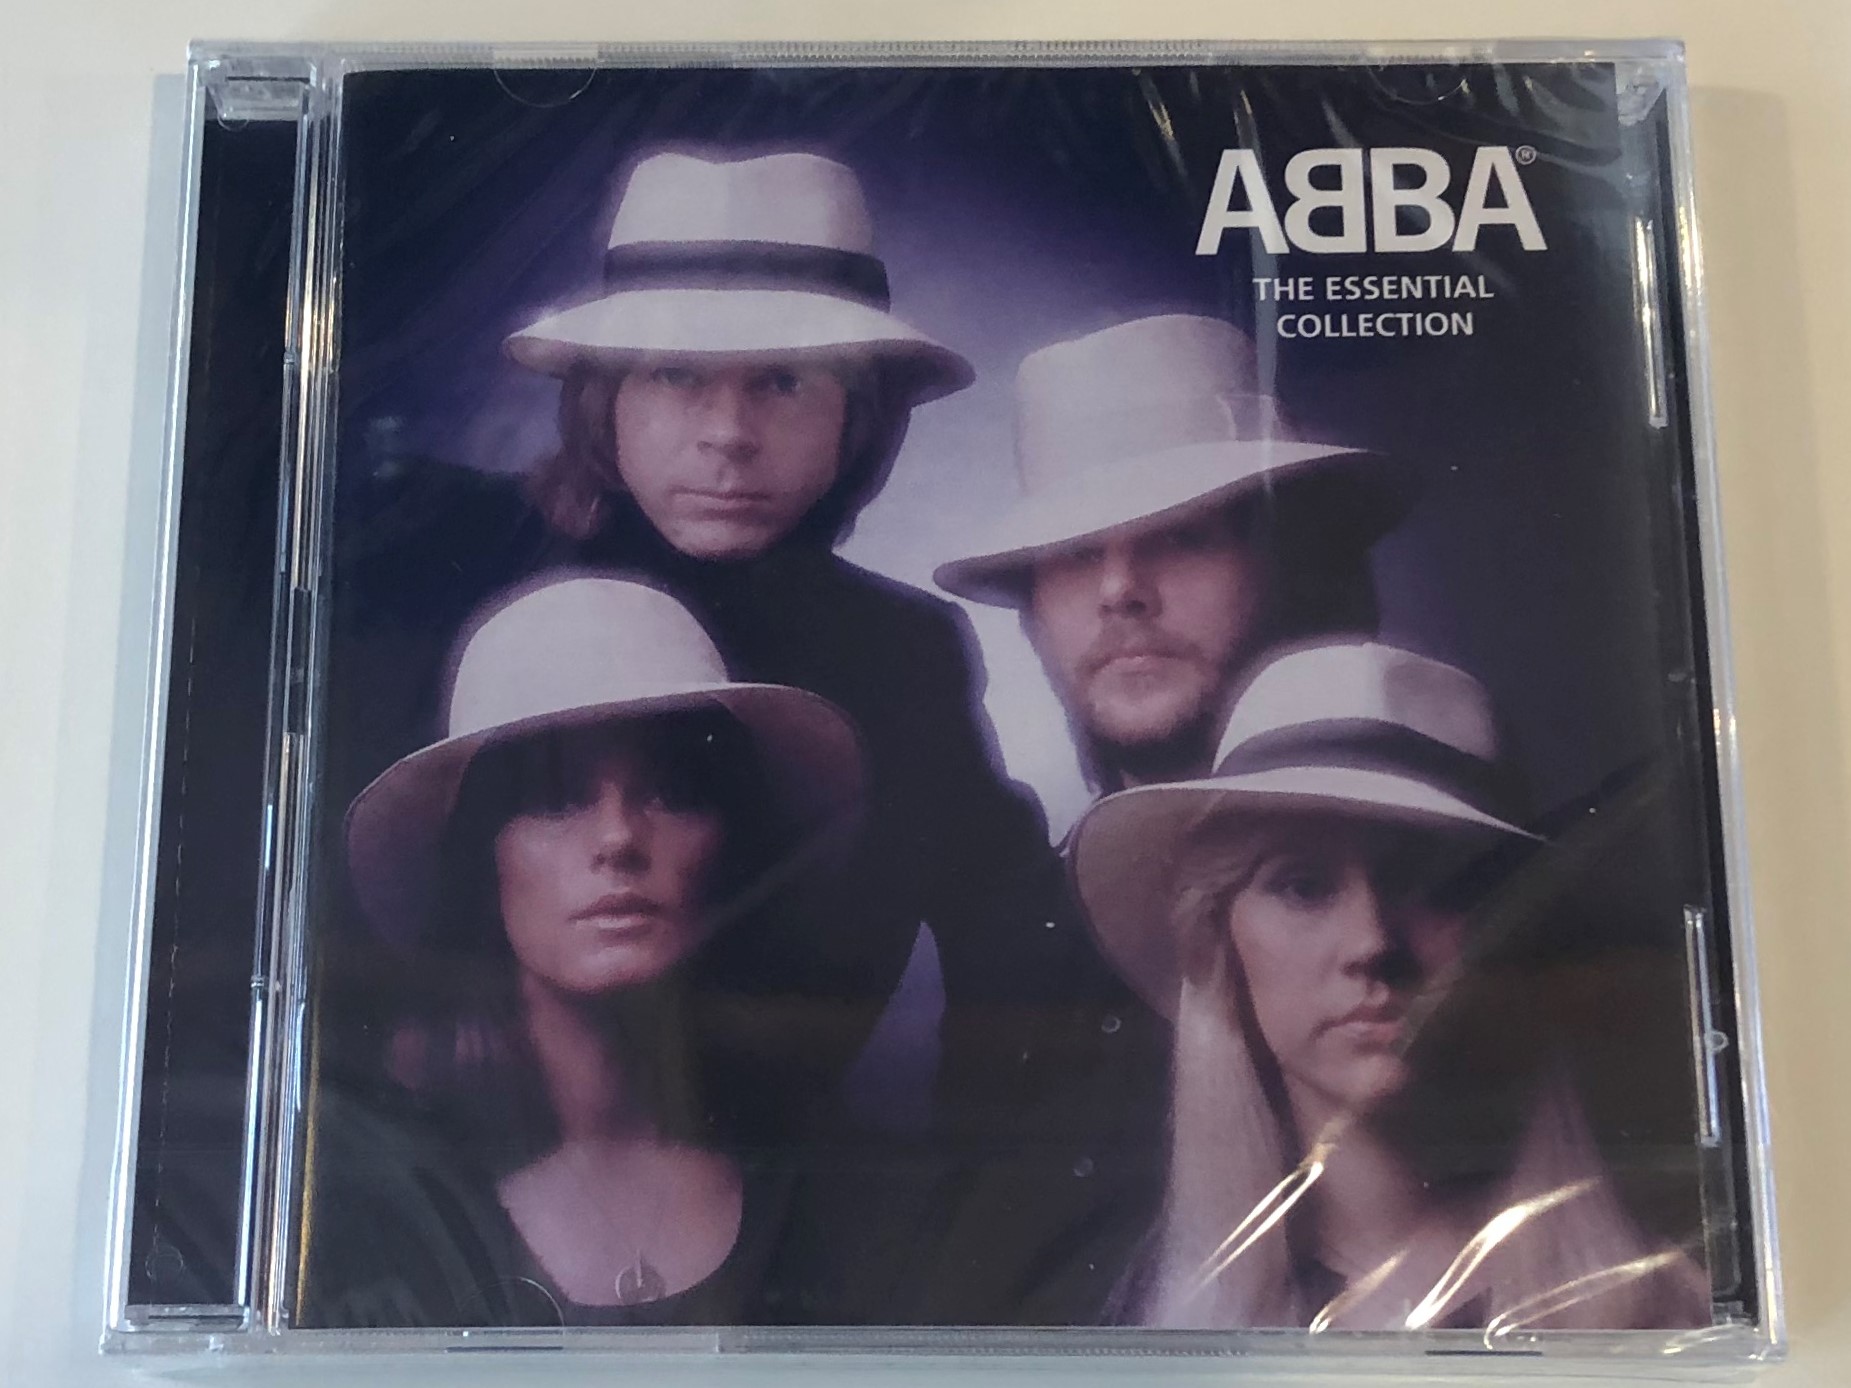 abba-the-essential-collection-polar-2x-audio-cd-2012-00602527993720-1-.jpg